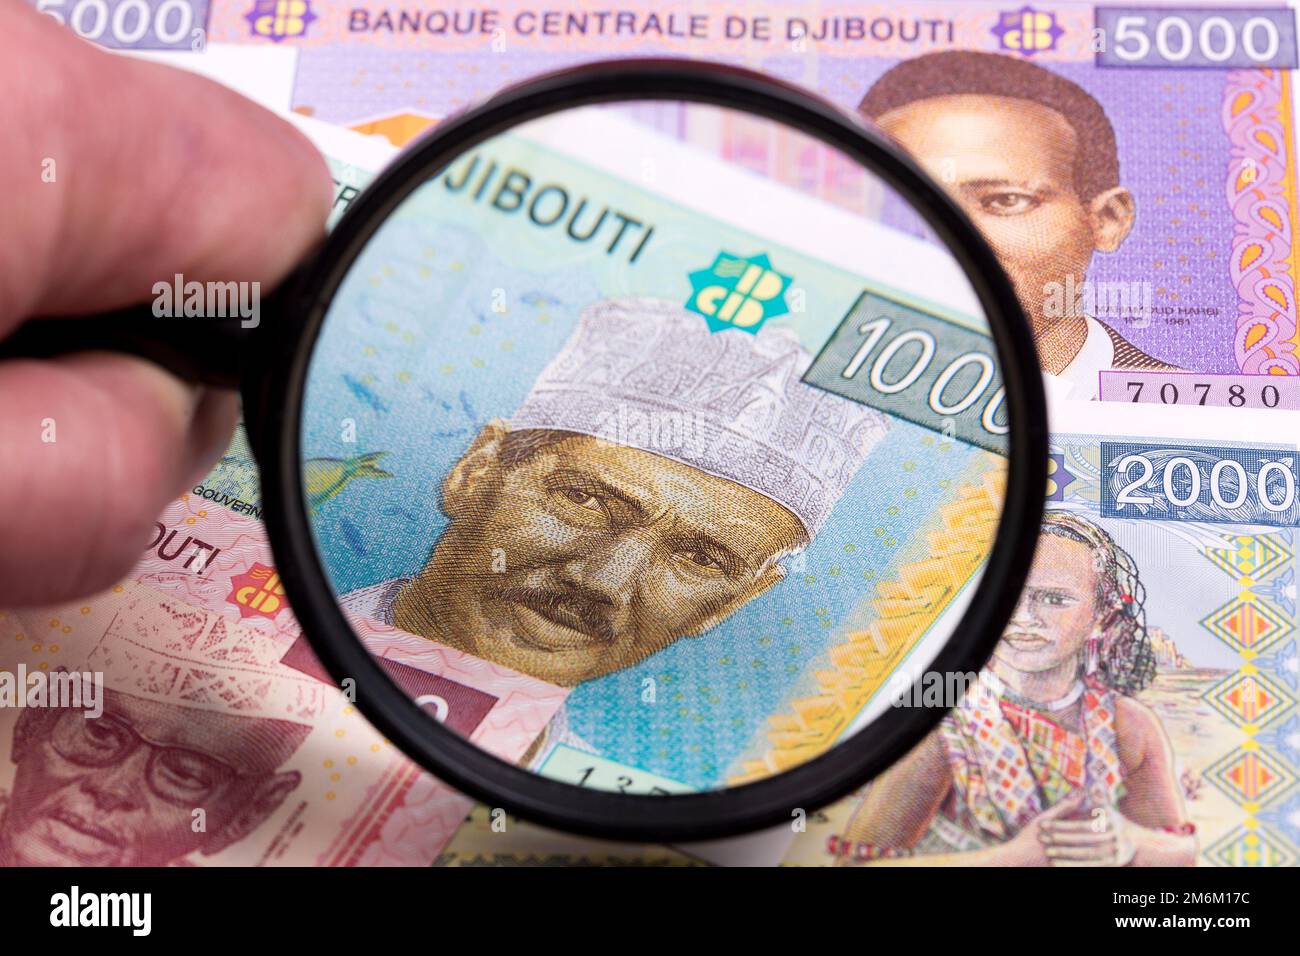 Djiboutian franc in the black wallet. Stock Photo